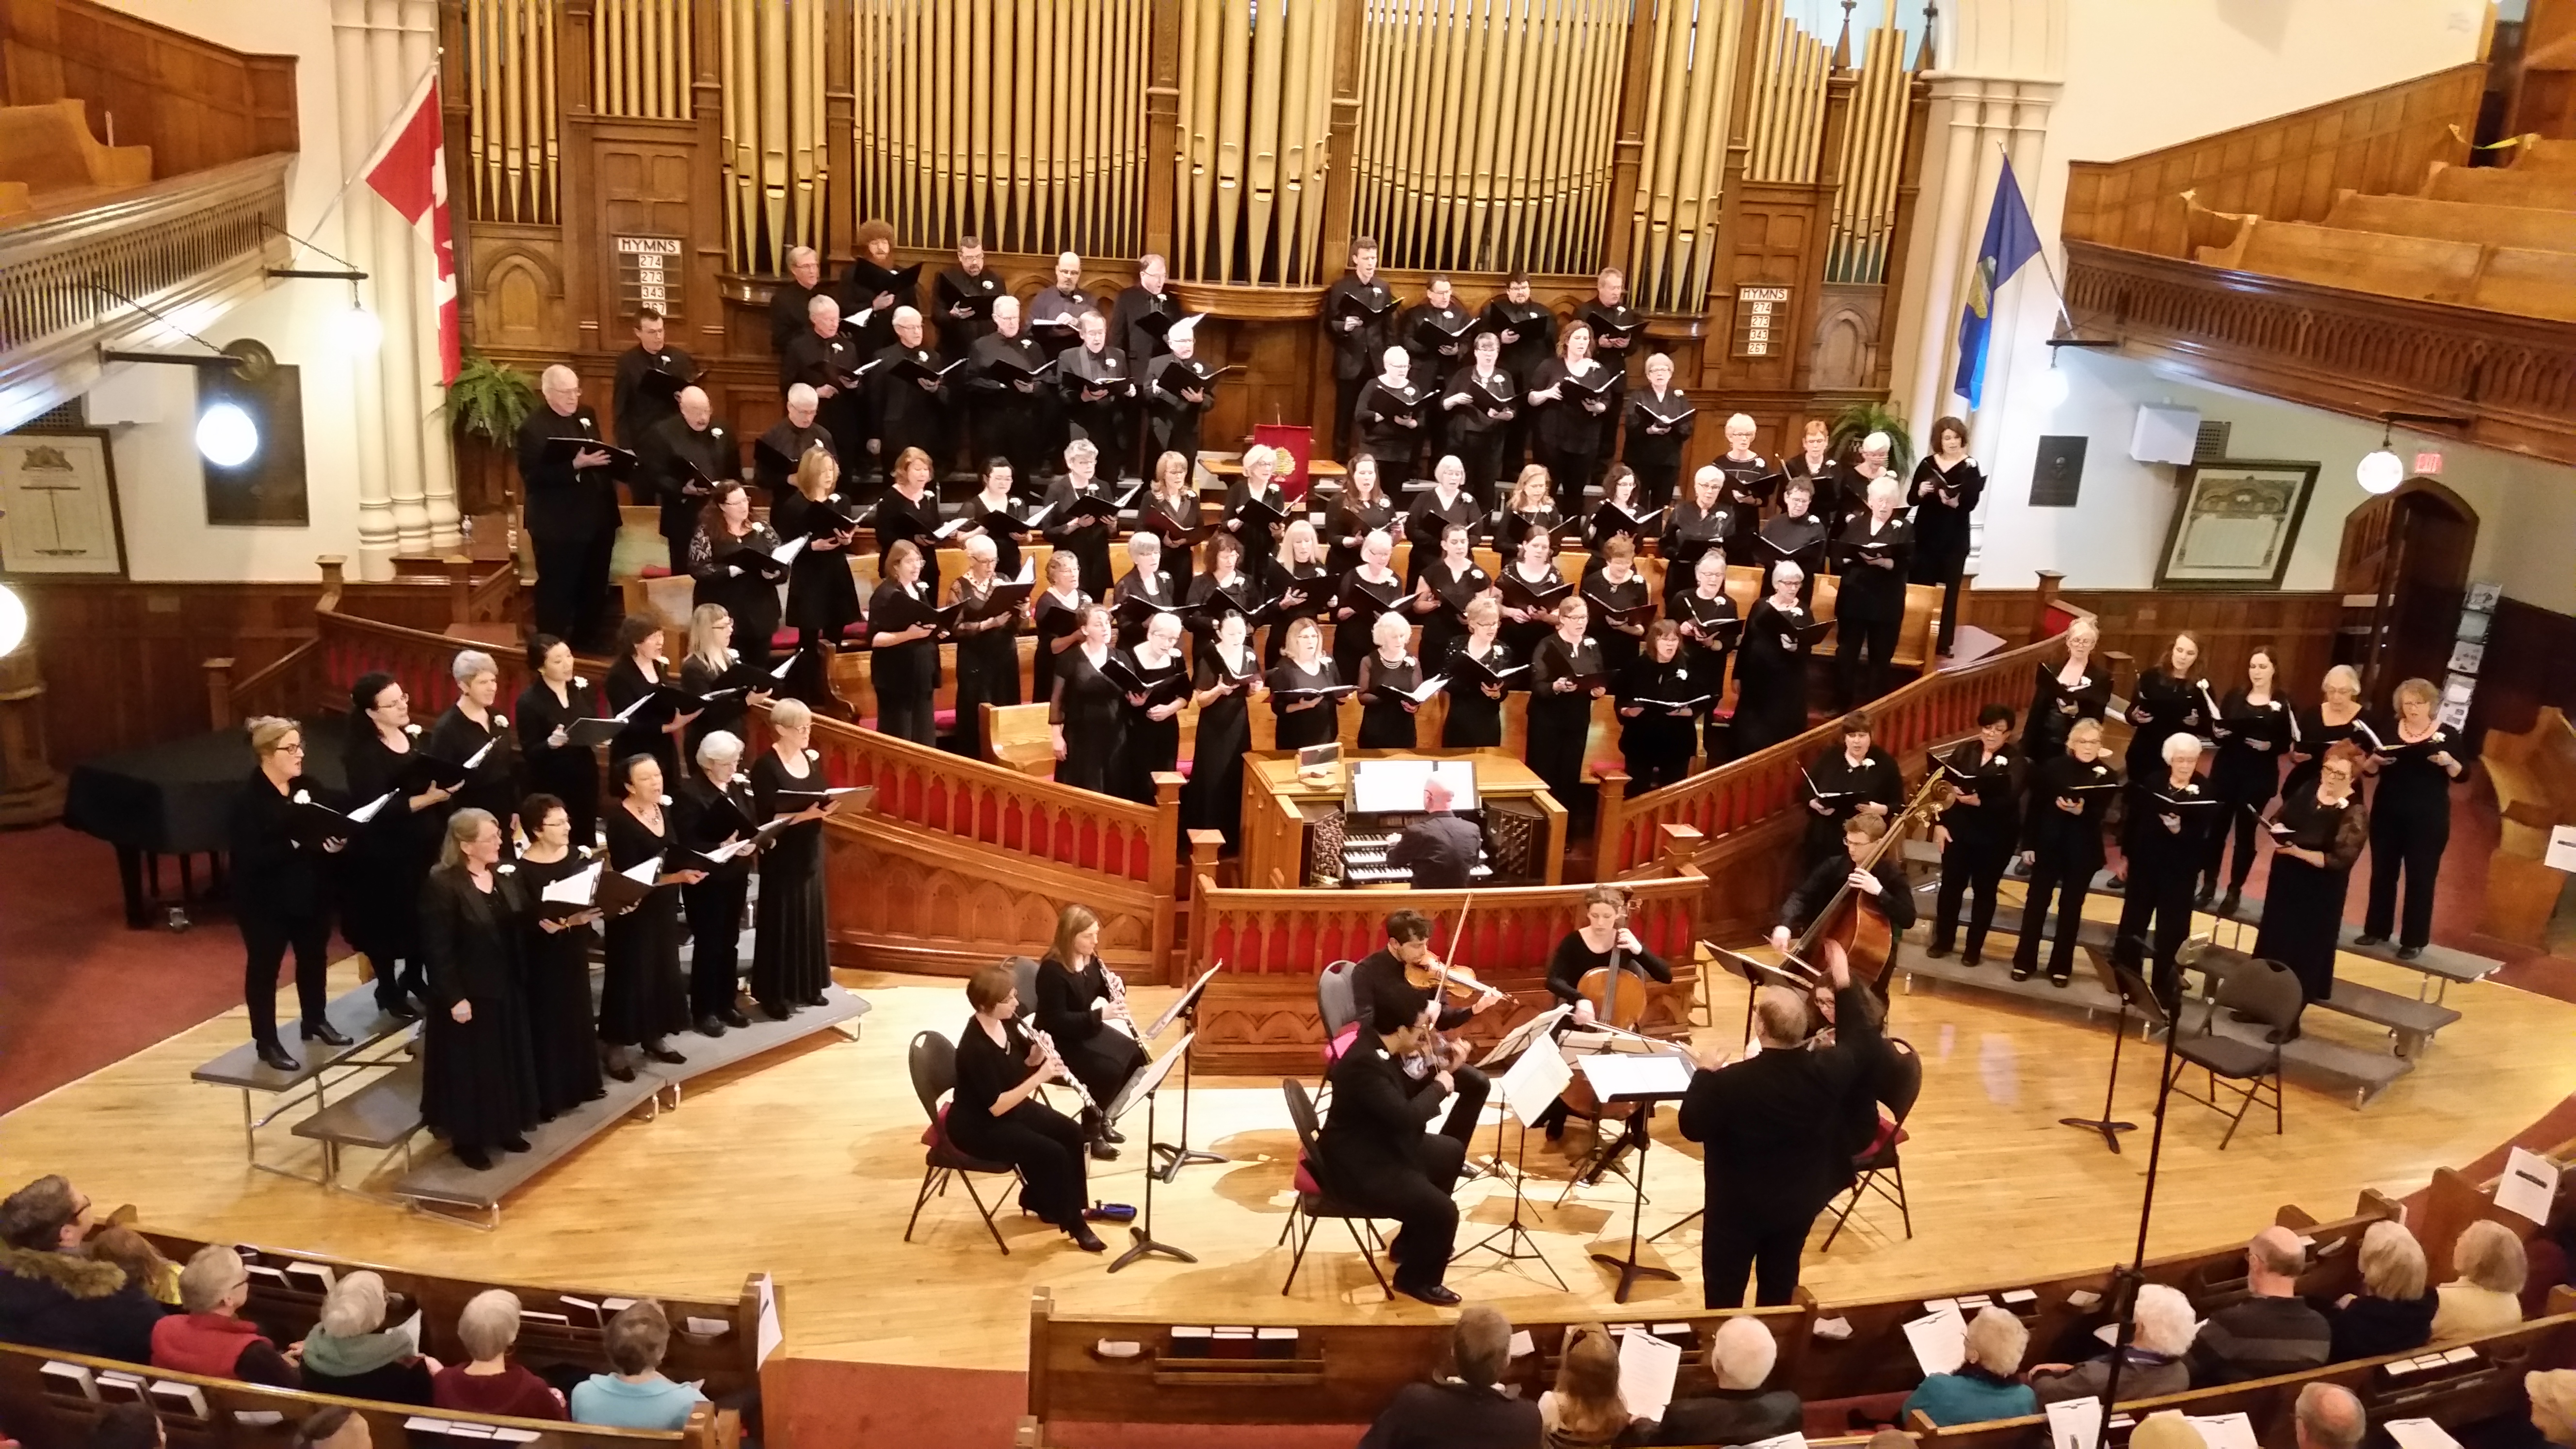 Sing Spirit: The Heart of Handel